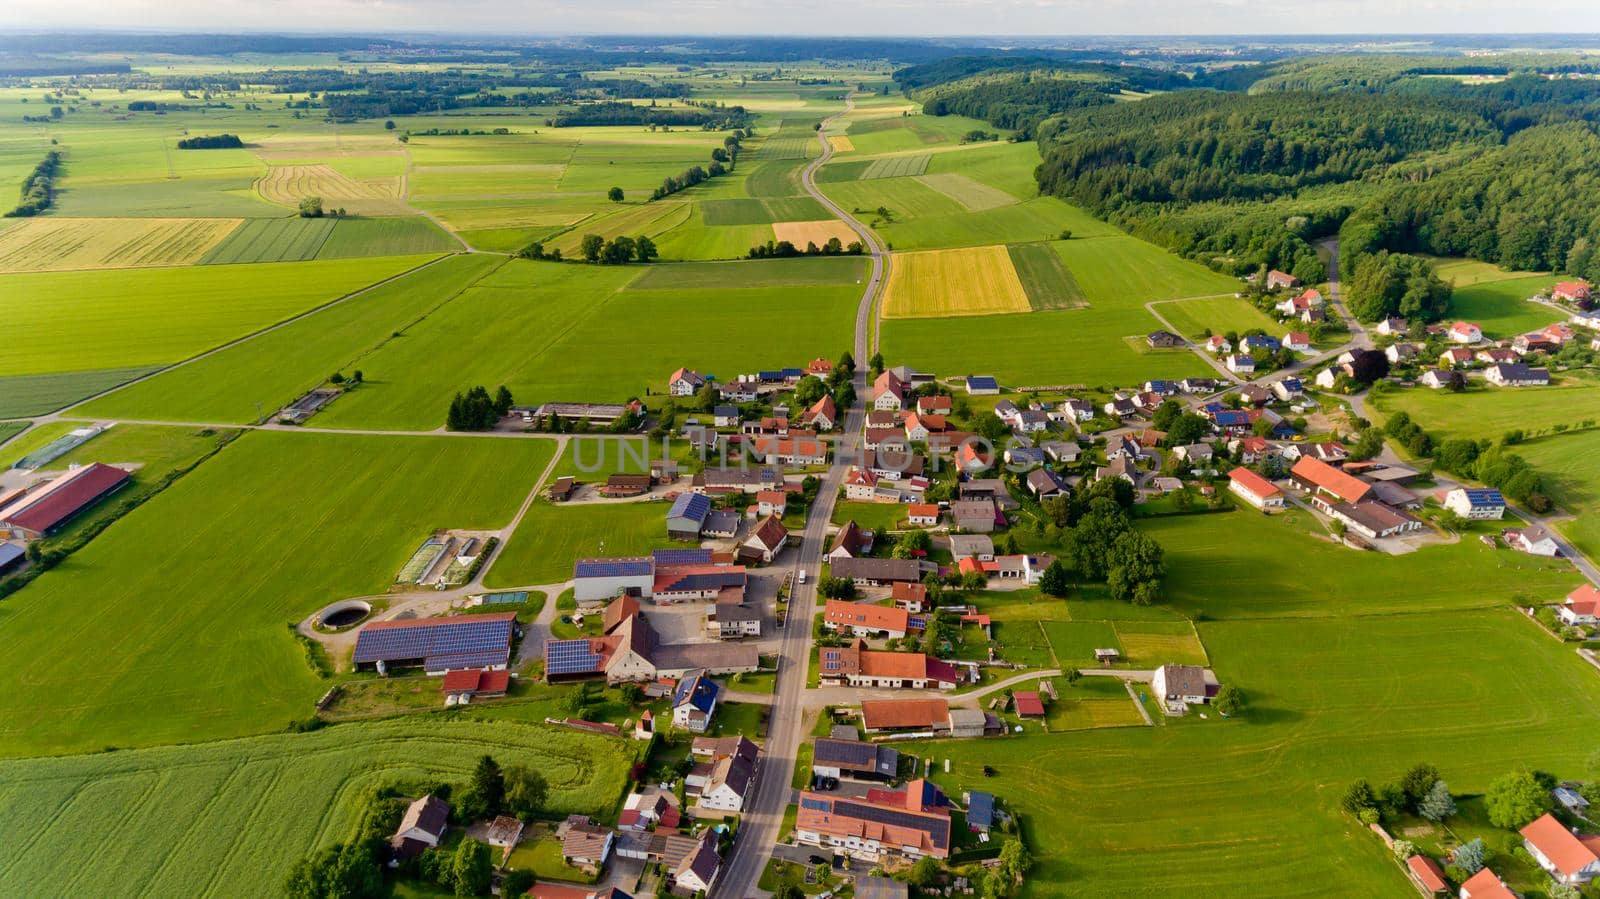 Aerial view of Boos village in Bavaria. Germany. by leonik